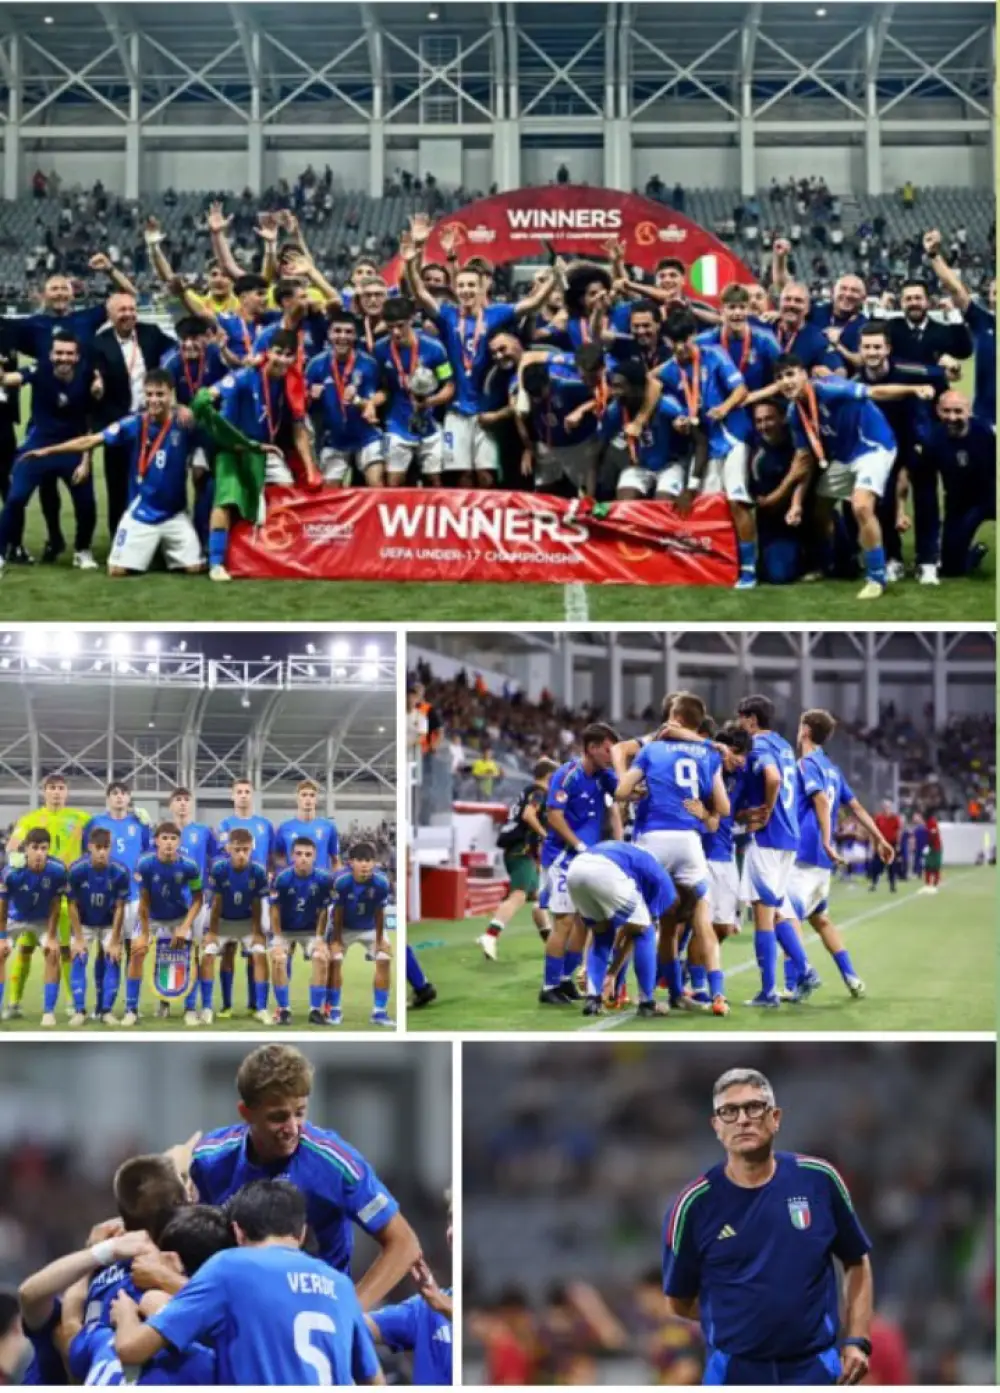 The Italian national team is the European U17 champion!